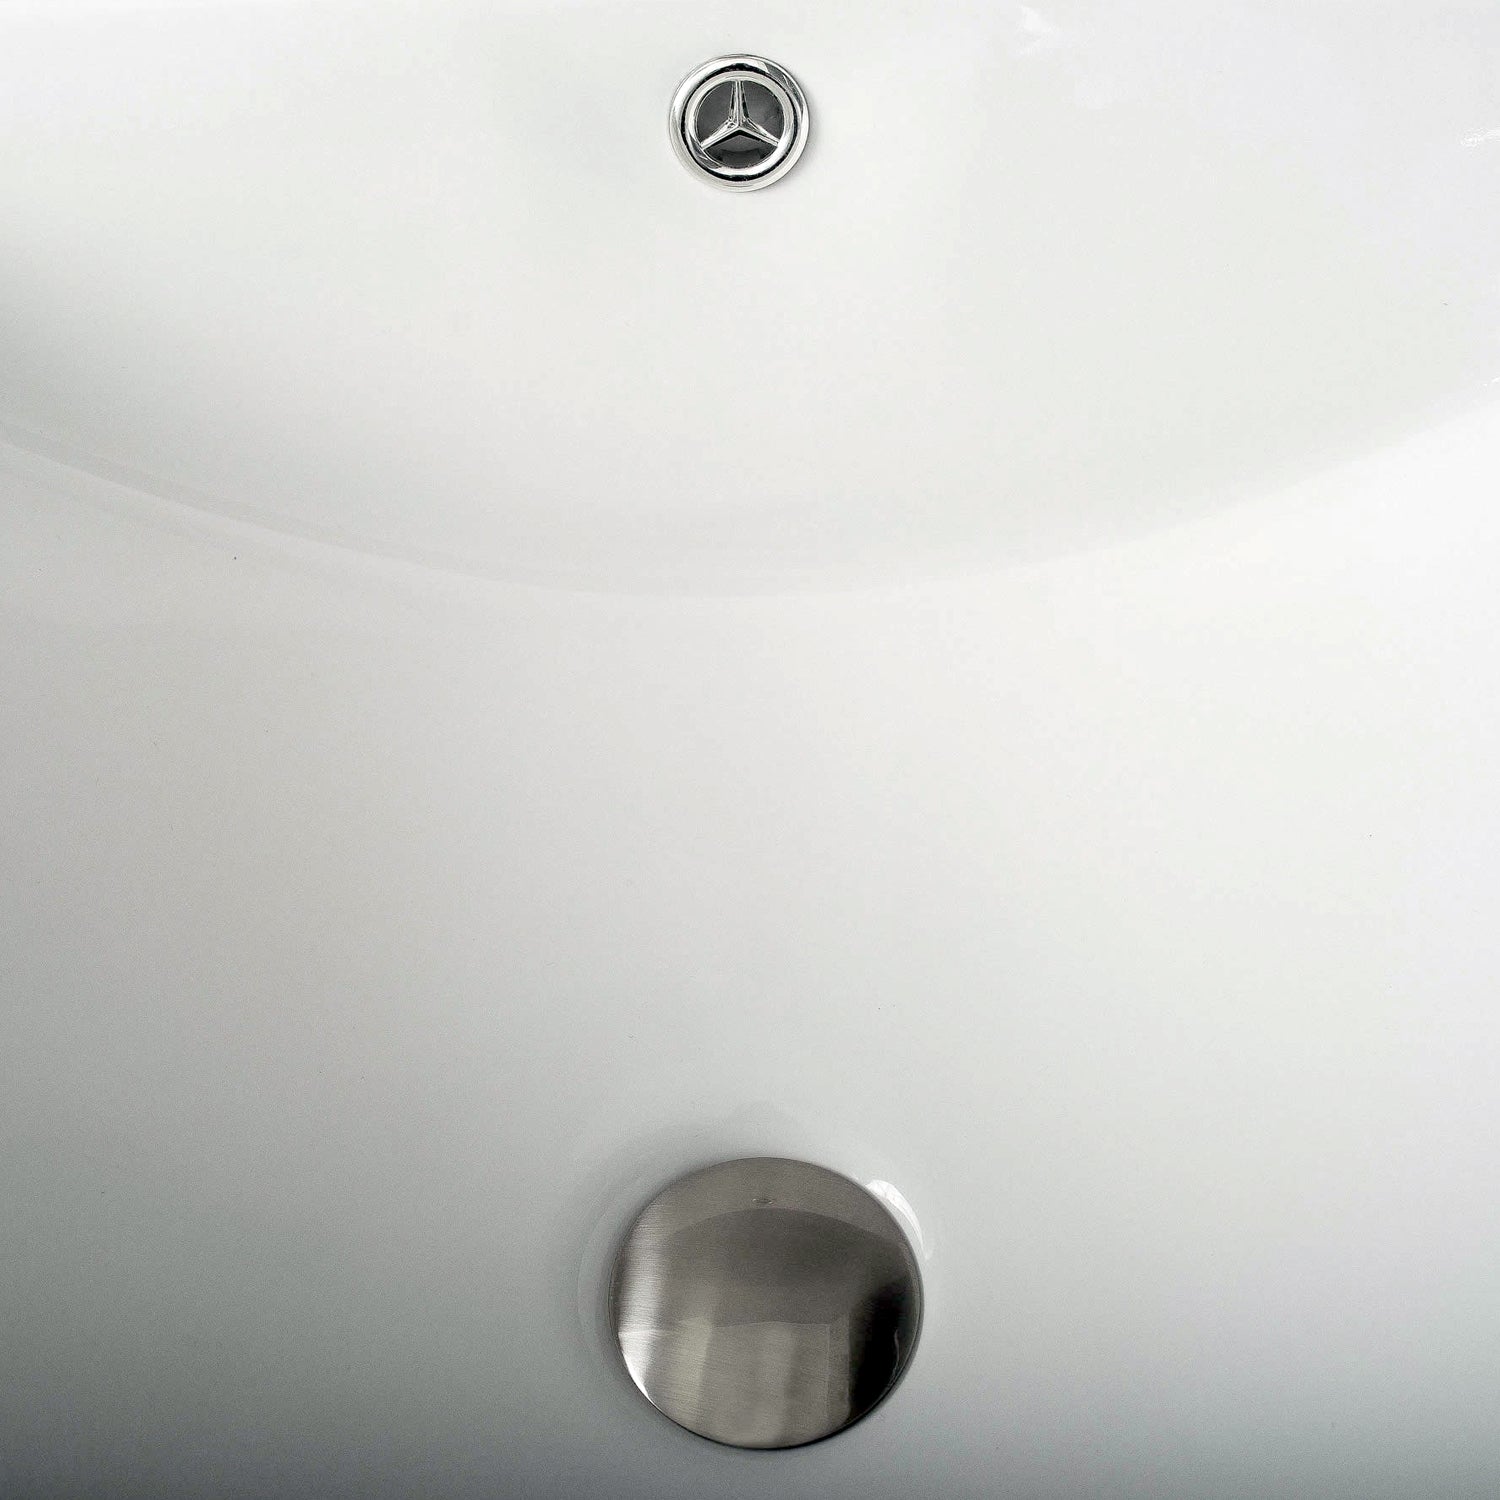 DAX Ceramic Square Single Bowl Undermount Bathroom Sink, White Finish, 22-1/6 x 15-1/2 x 8-5/16 Inches (BSN-202G-W)